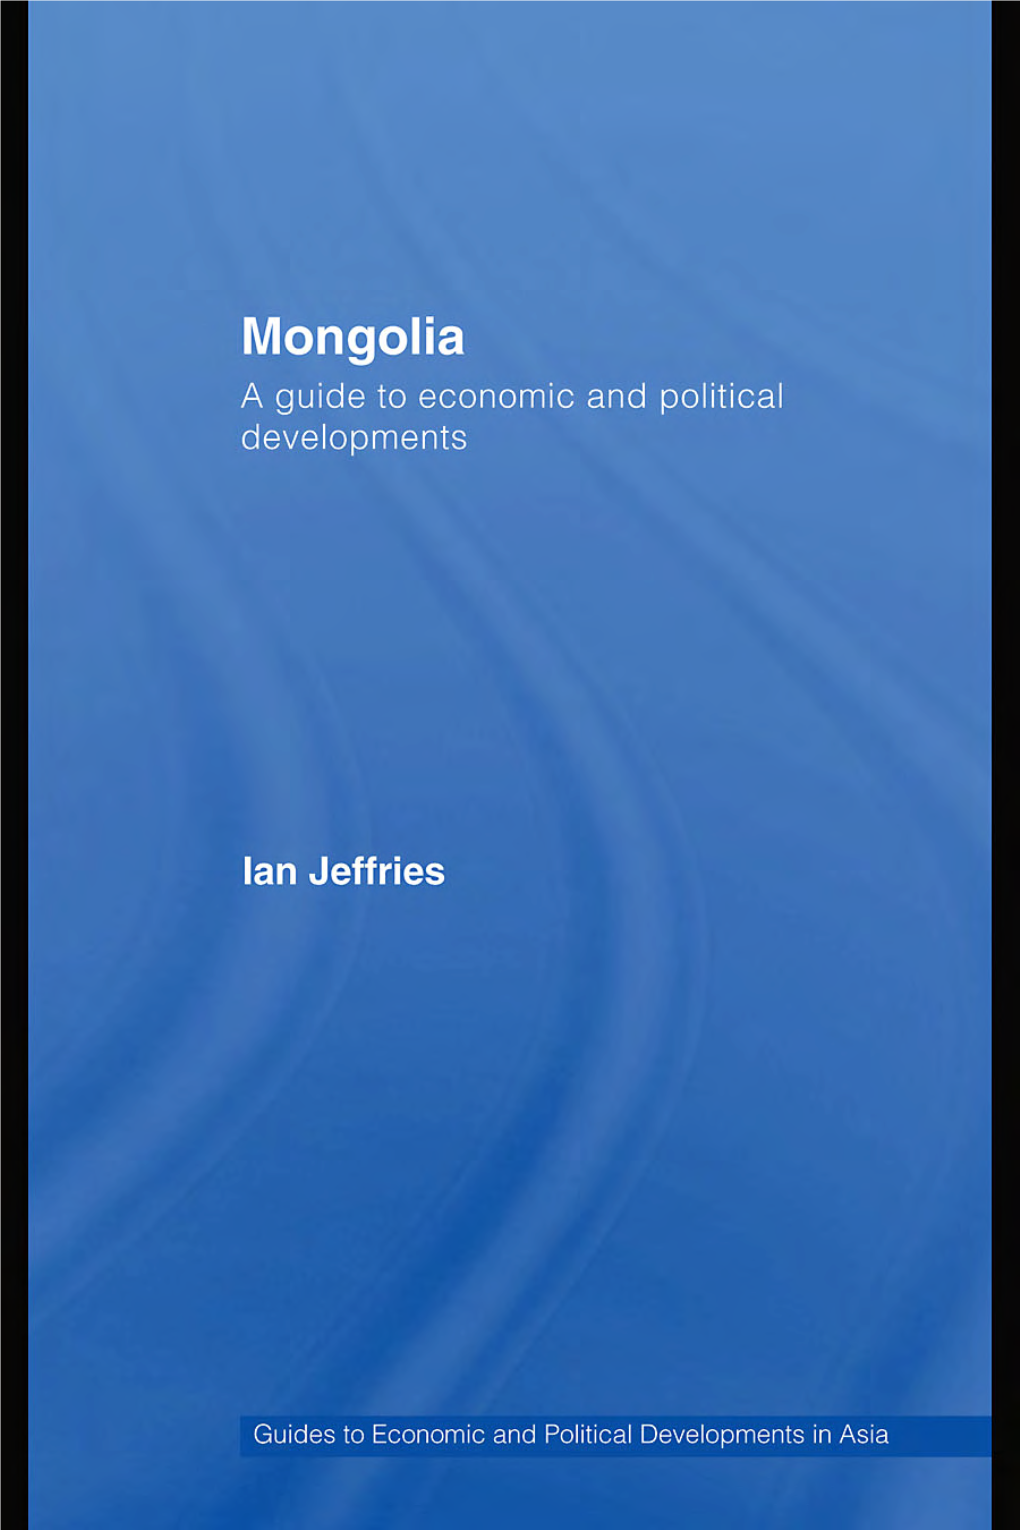 Mongolia: a Guide to Economic and Political Developments